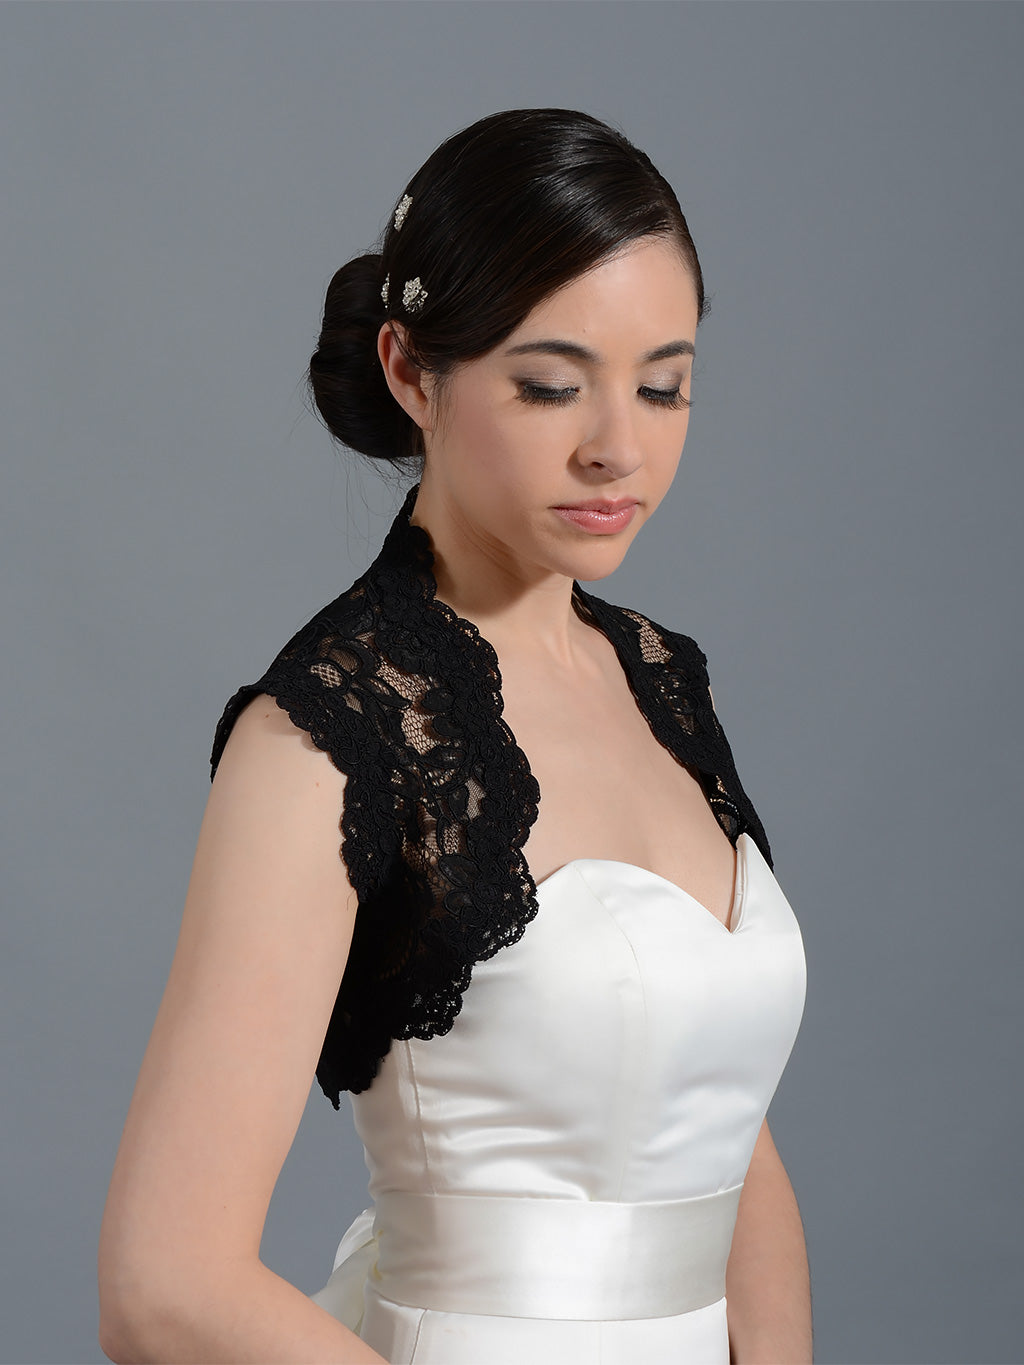 Black sleeveless bridal alencon lace bolero jacket Lace_064